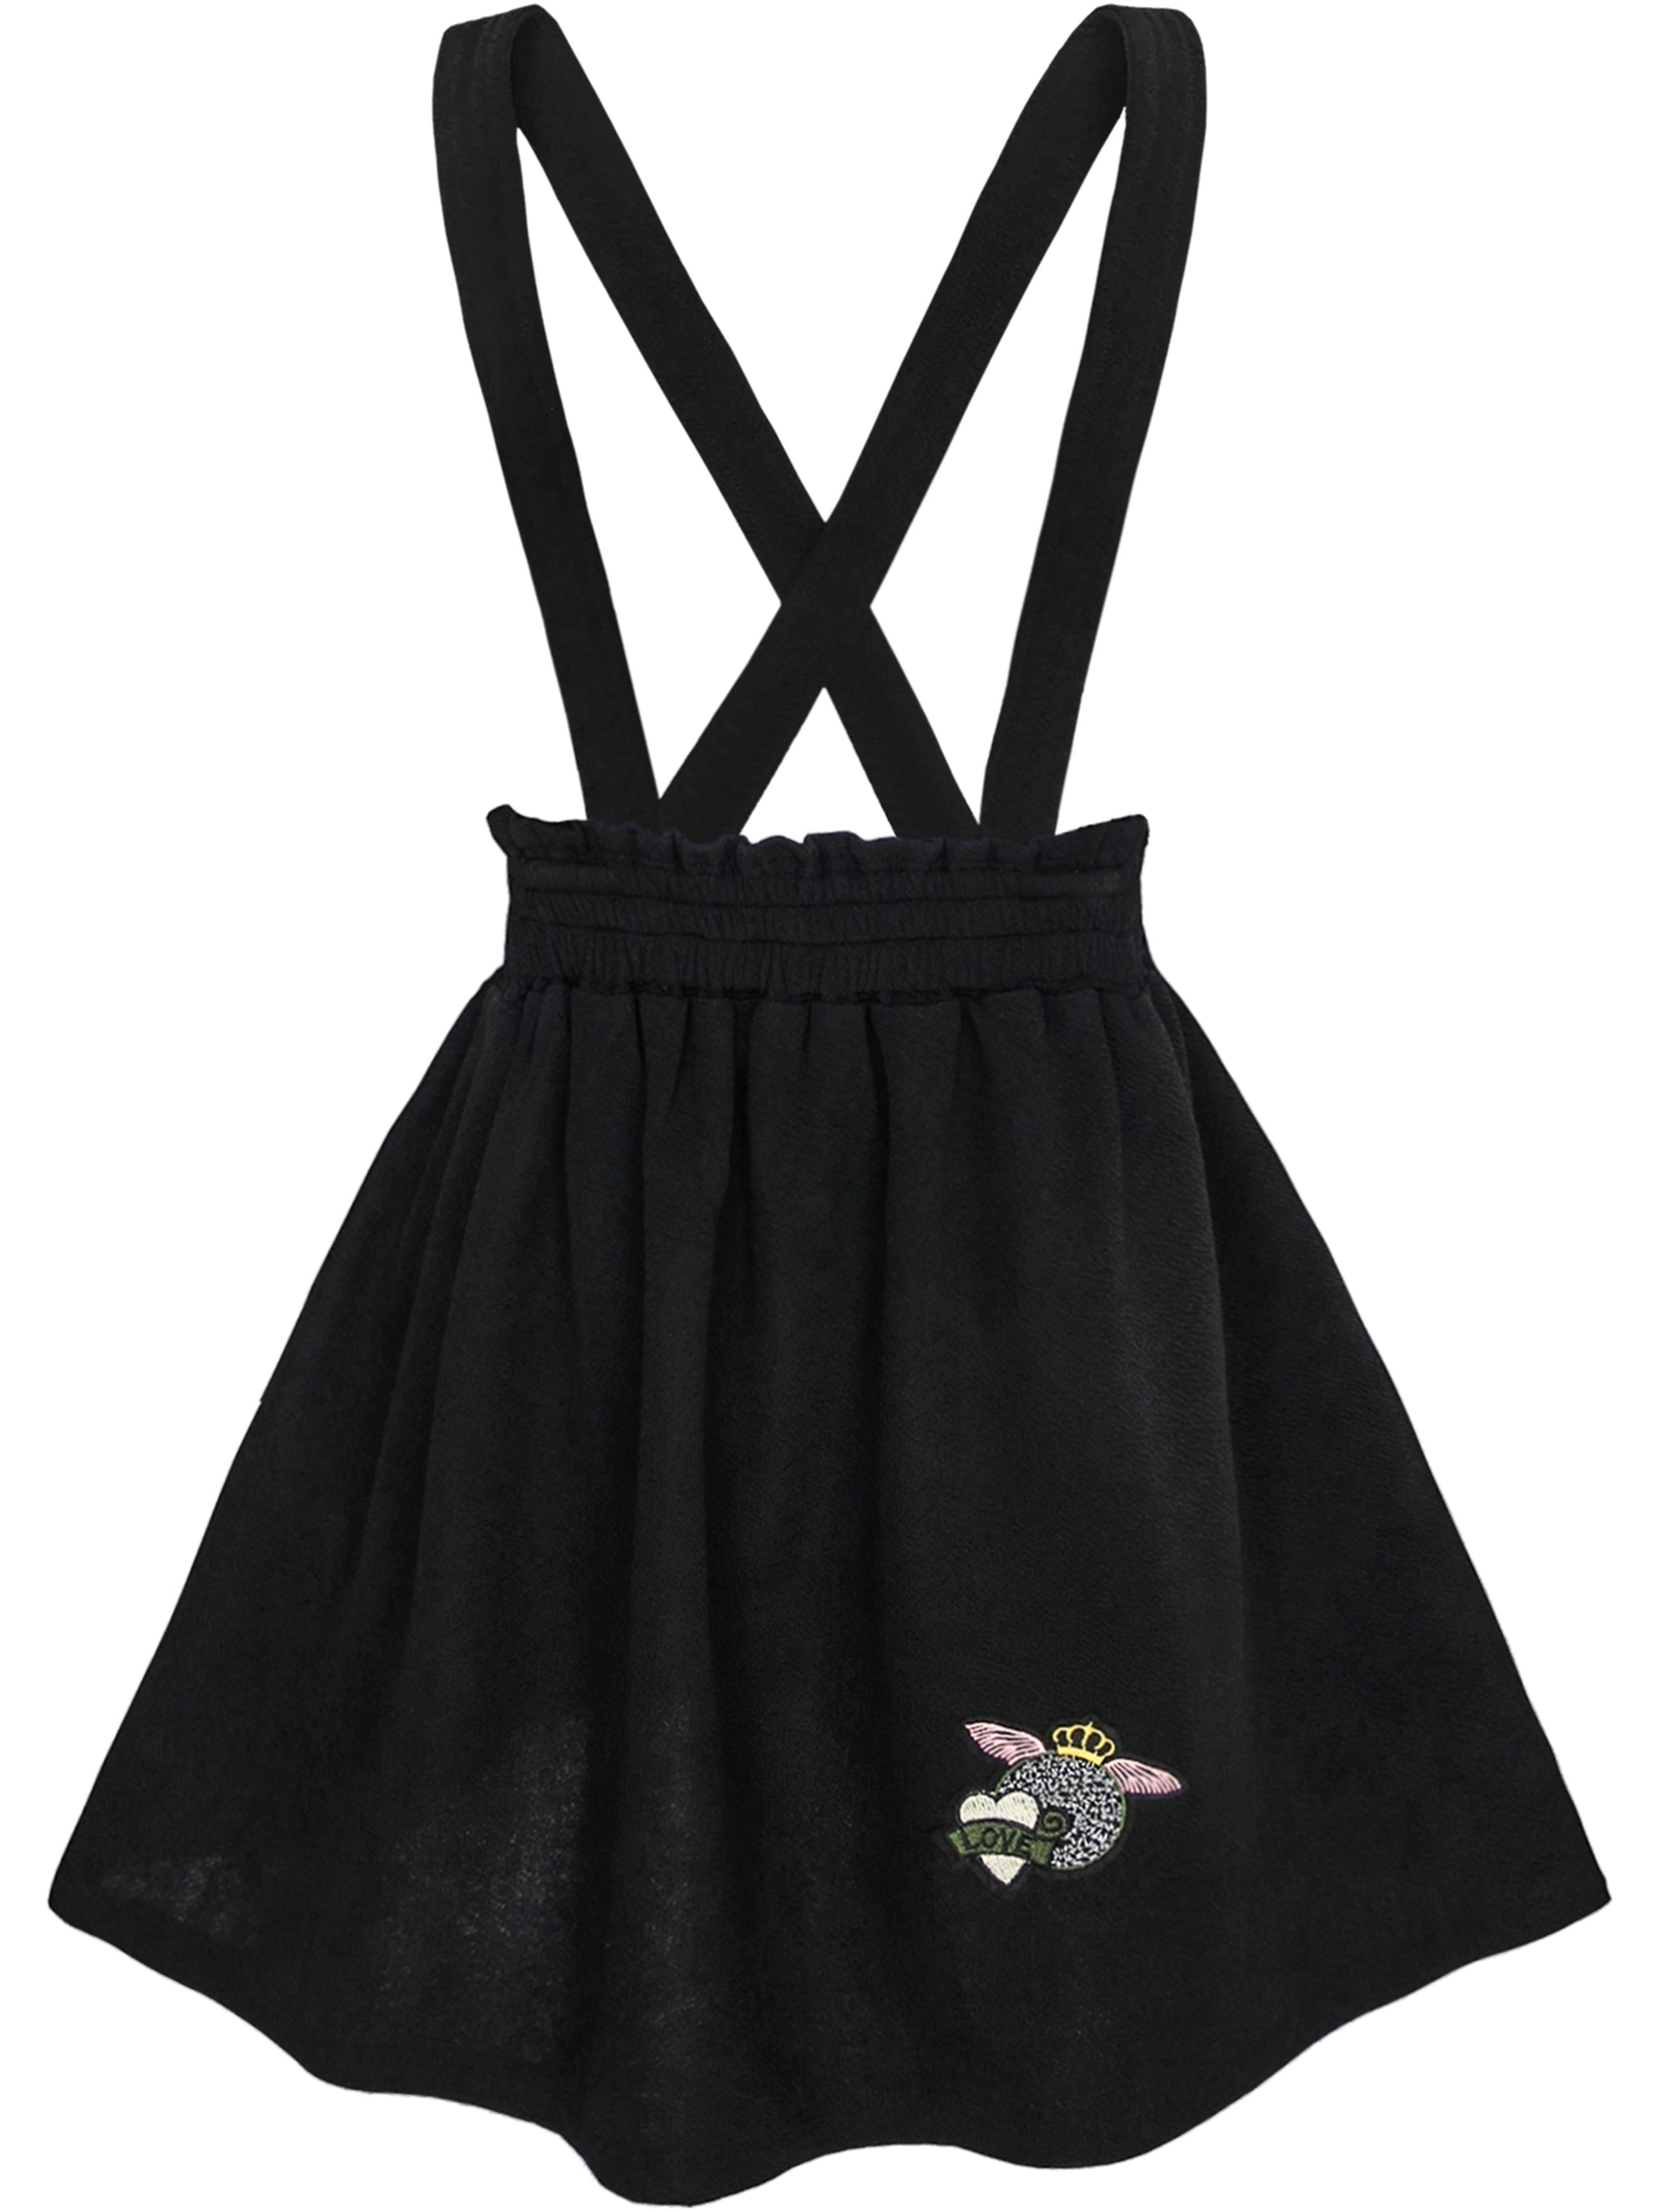 Sunny Fashion Girls Dress School Black White Check Suspender Skirt Size 4-10